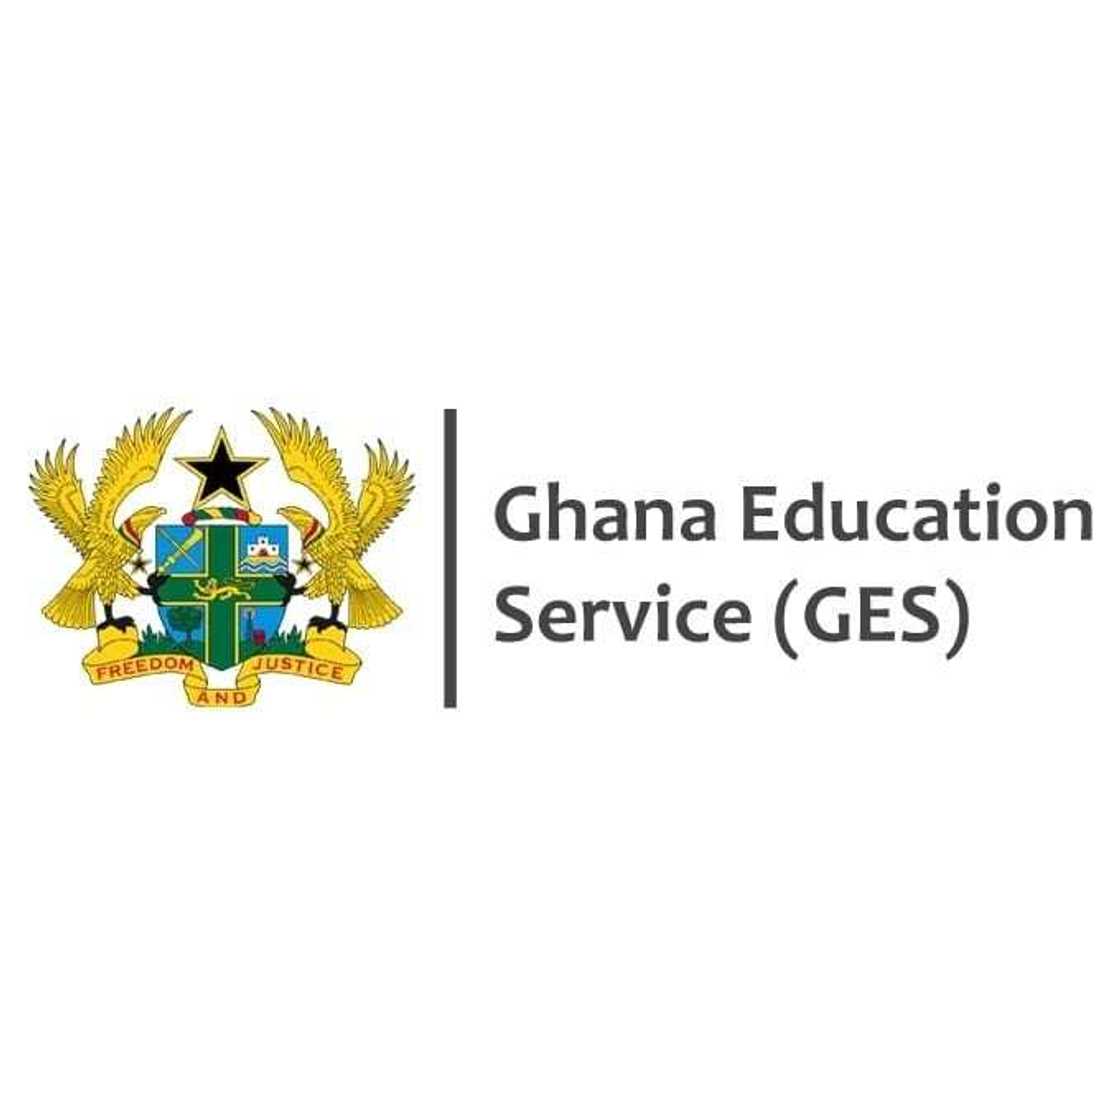 ghana education service contact address
ghana education service kumasi contact
ghana education service contact numbers
ghana education service ashanti region contact